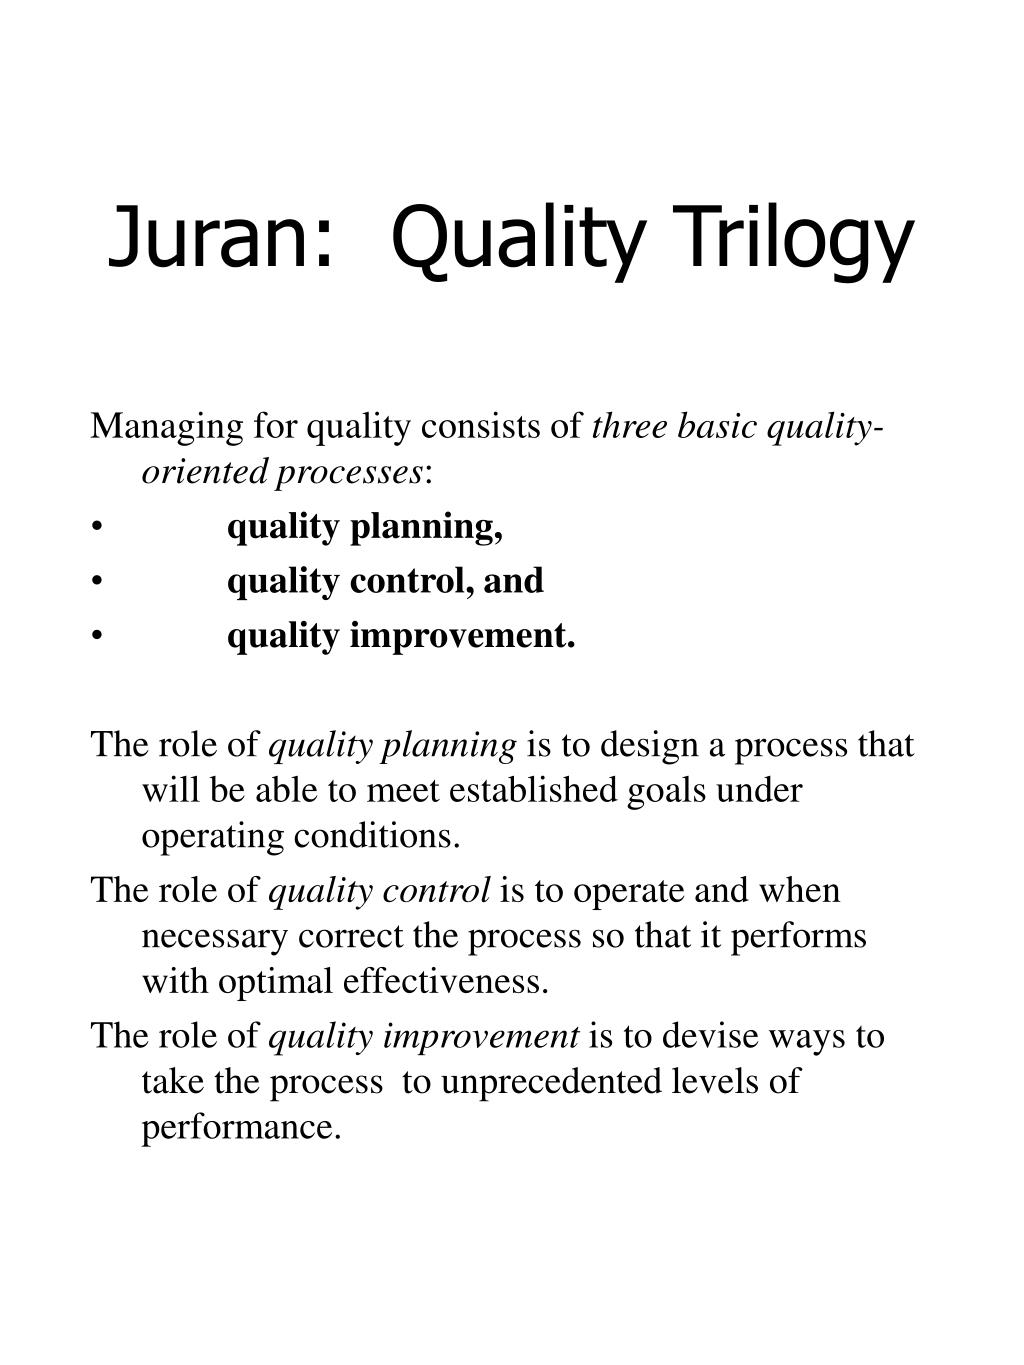 what is juran trilogy